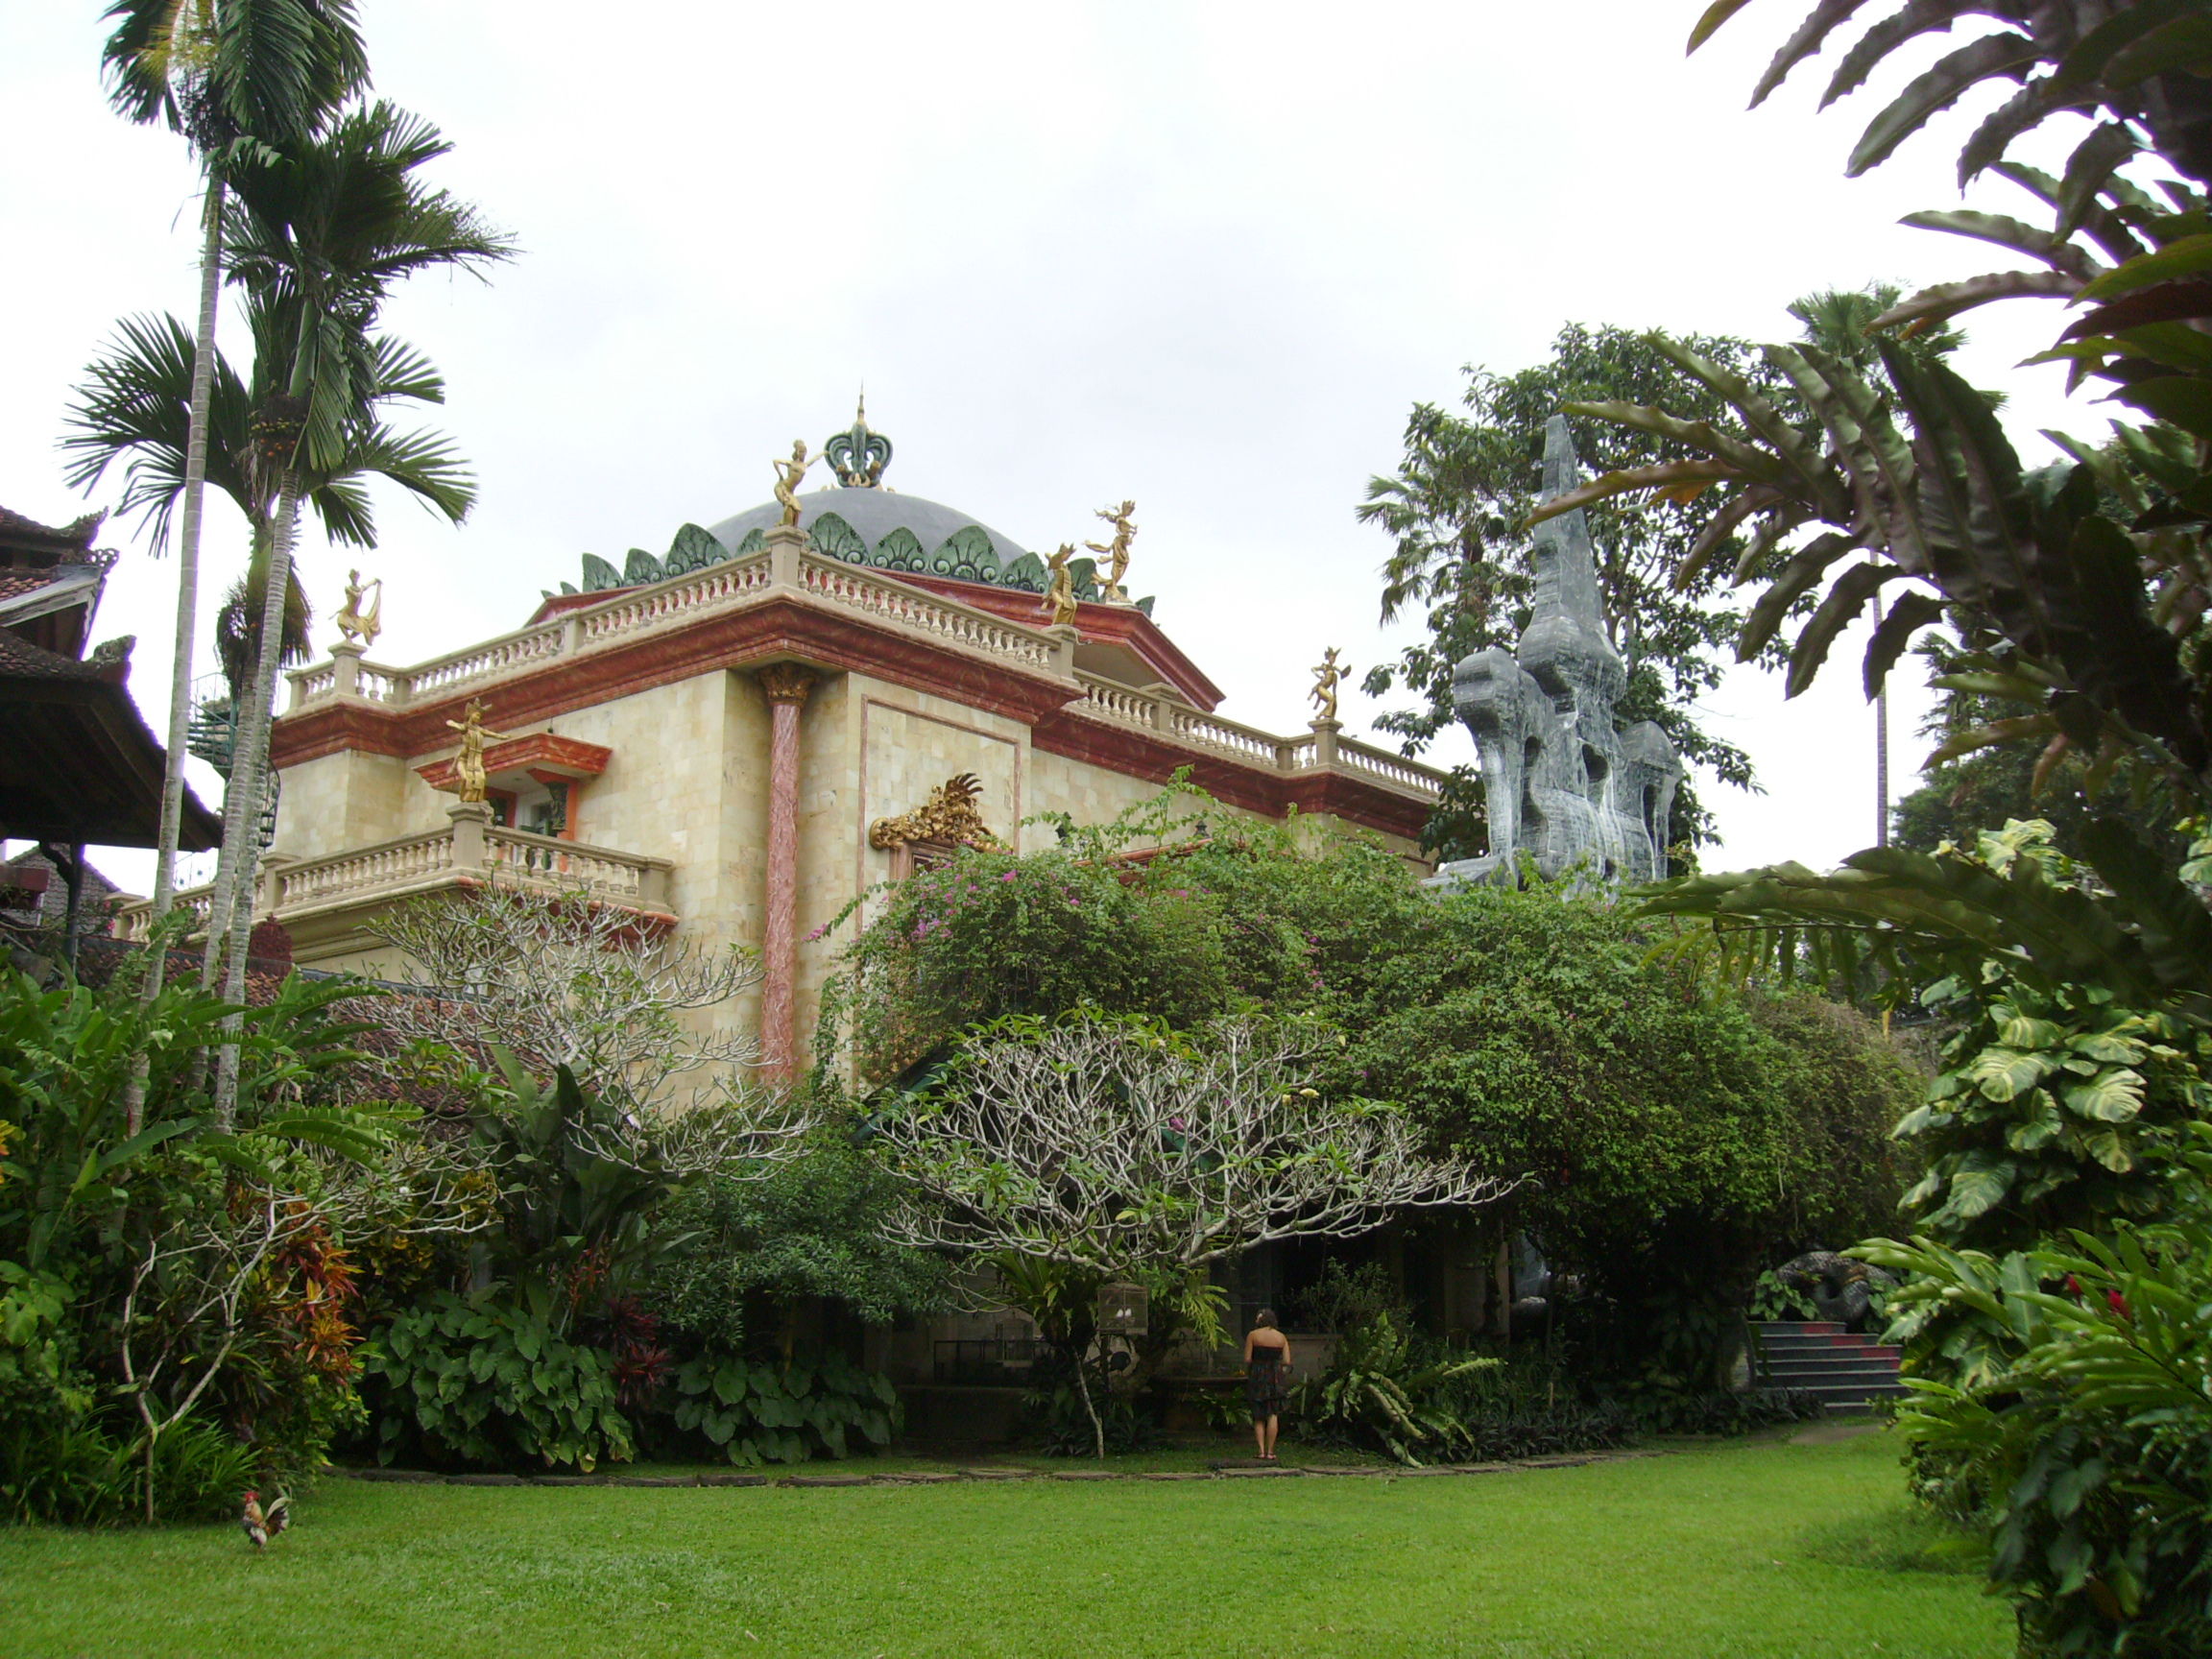 Maison d'Antonio Blanco